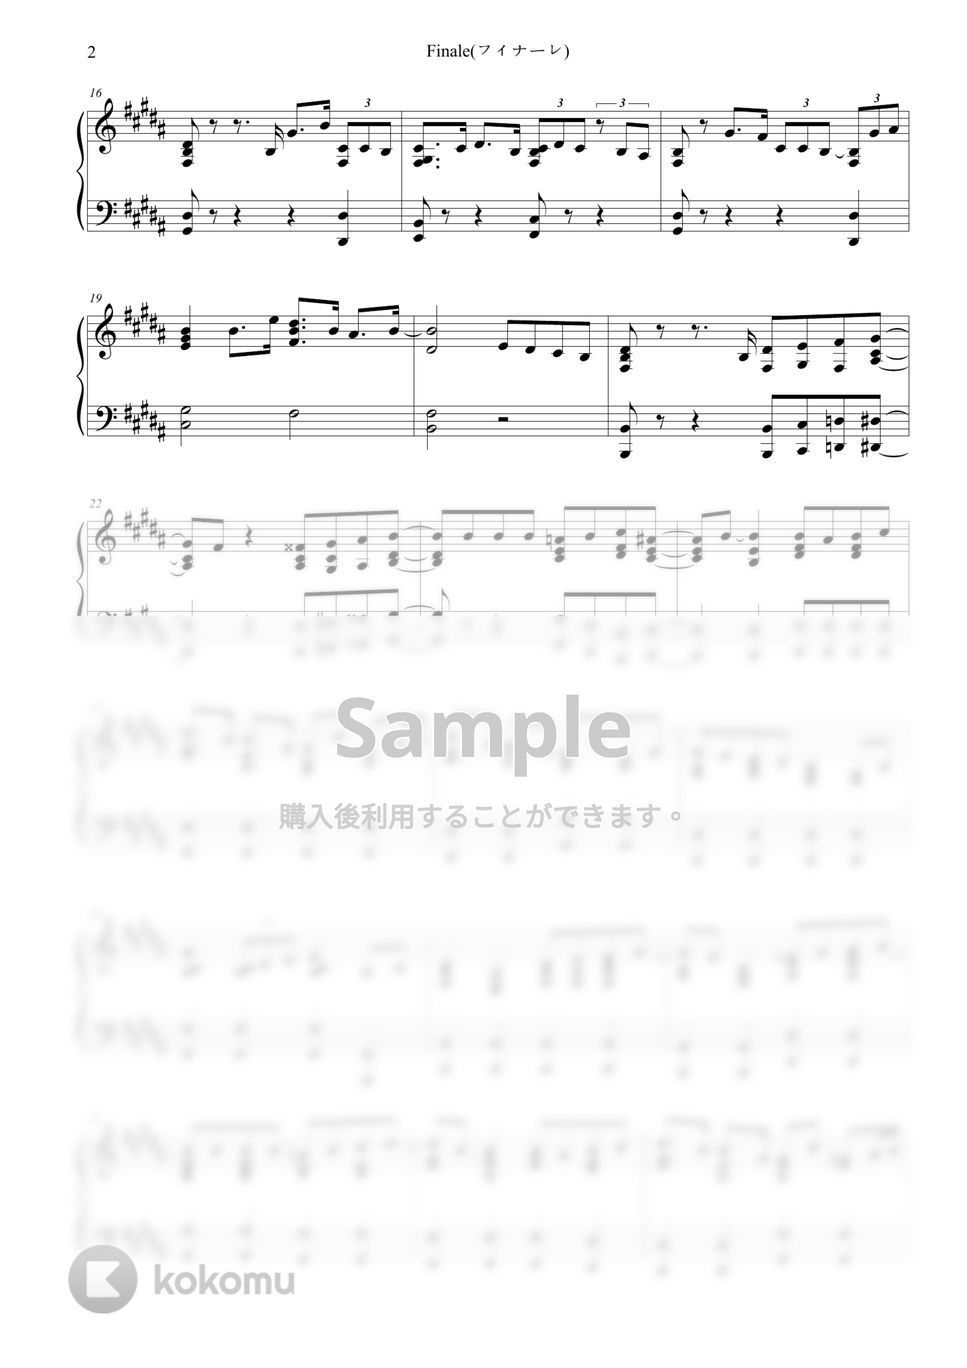 eill - Finale(フィナーレ) |Natsu e no Tunnel OST (Bkey,Ckey) by sora Hong